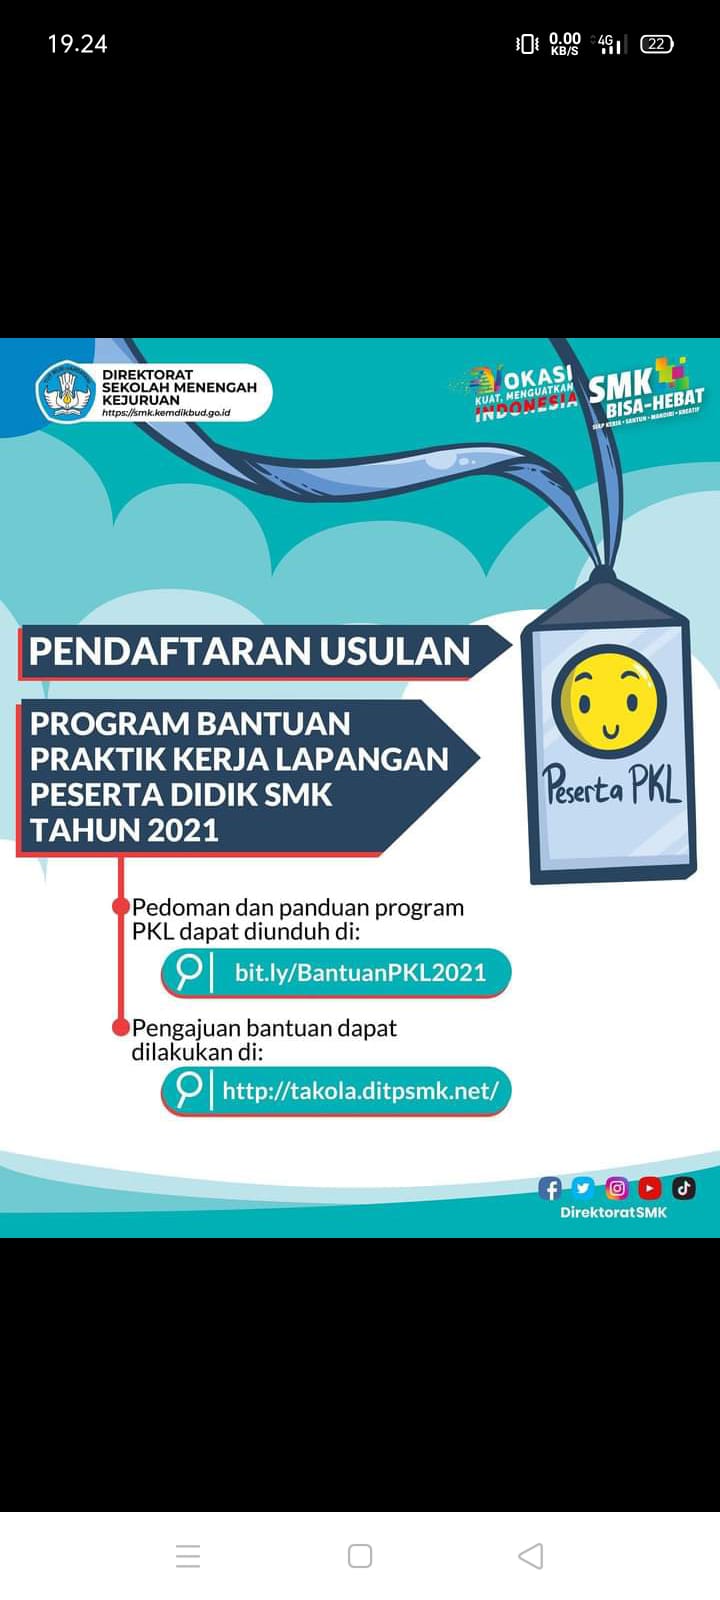 Pendaftaran Usulan Program Bantuan PKL SMK Tahun 2021